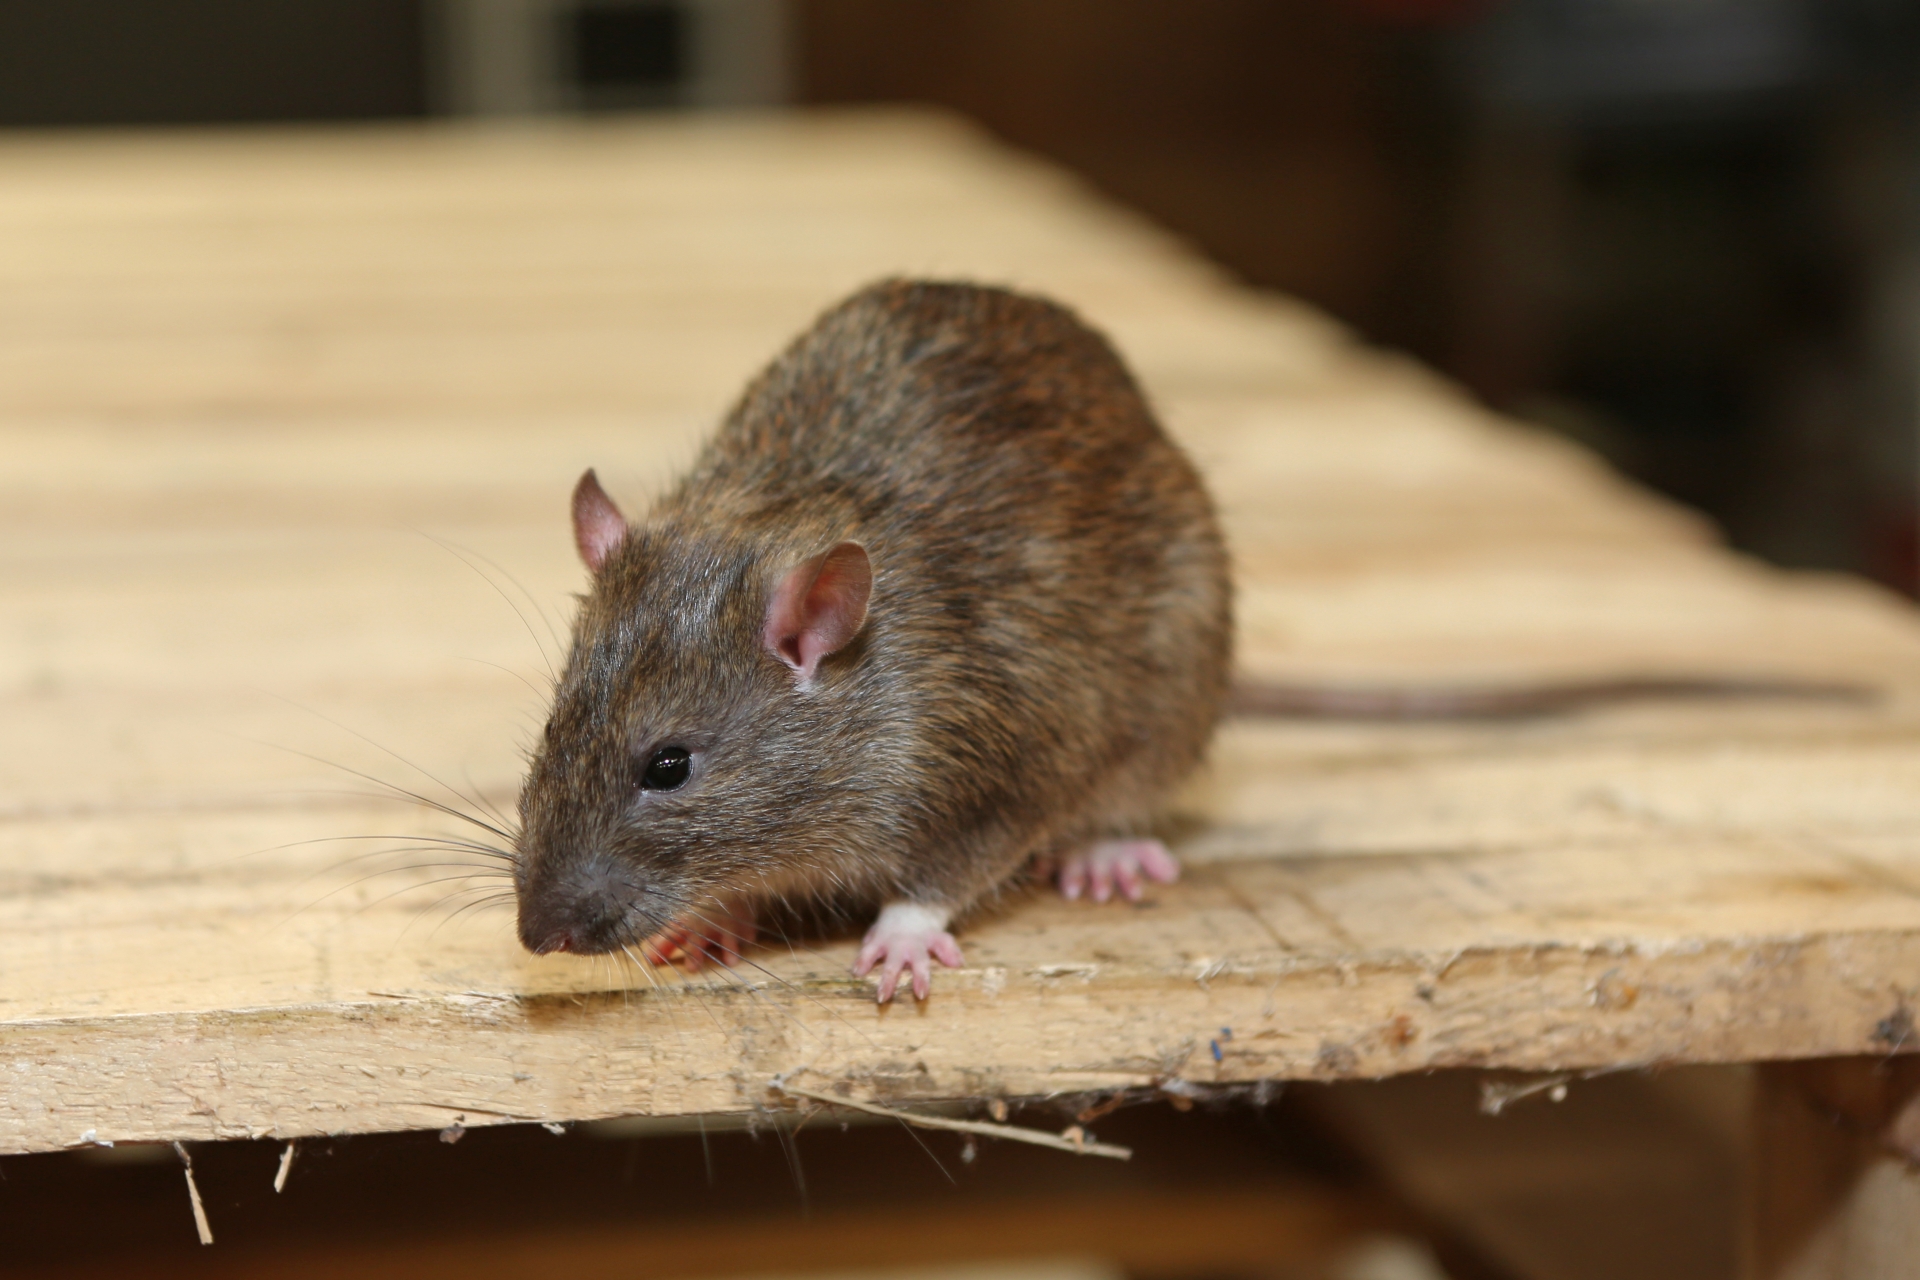 Rat extermination, Pest Control in Erith Marshes, DA18. Call Now 020 8166 9746